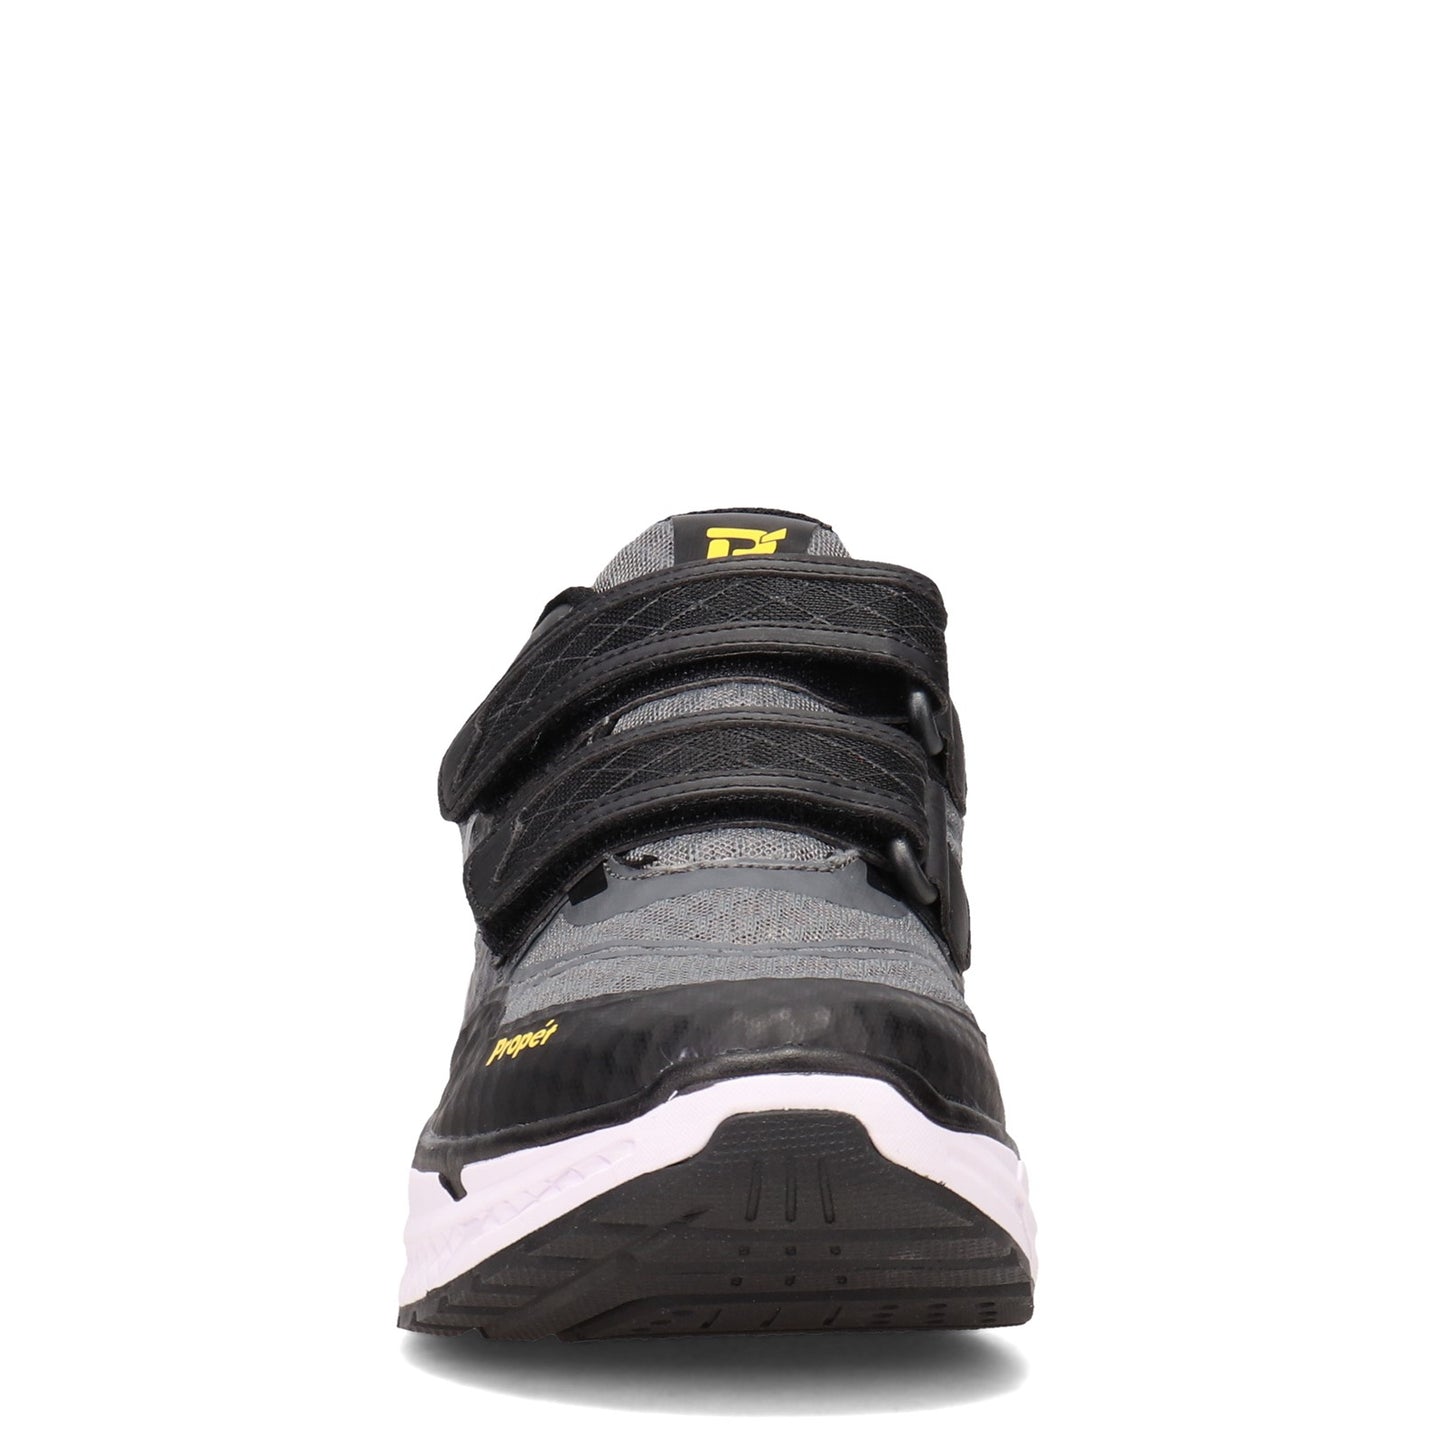 Peltz Shoes  Men's Propet Ultra Strap Walking Shoe GREY BLACK MAA203M-GYB